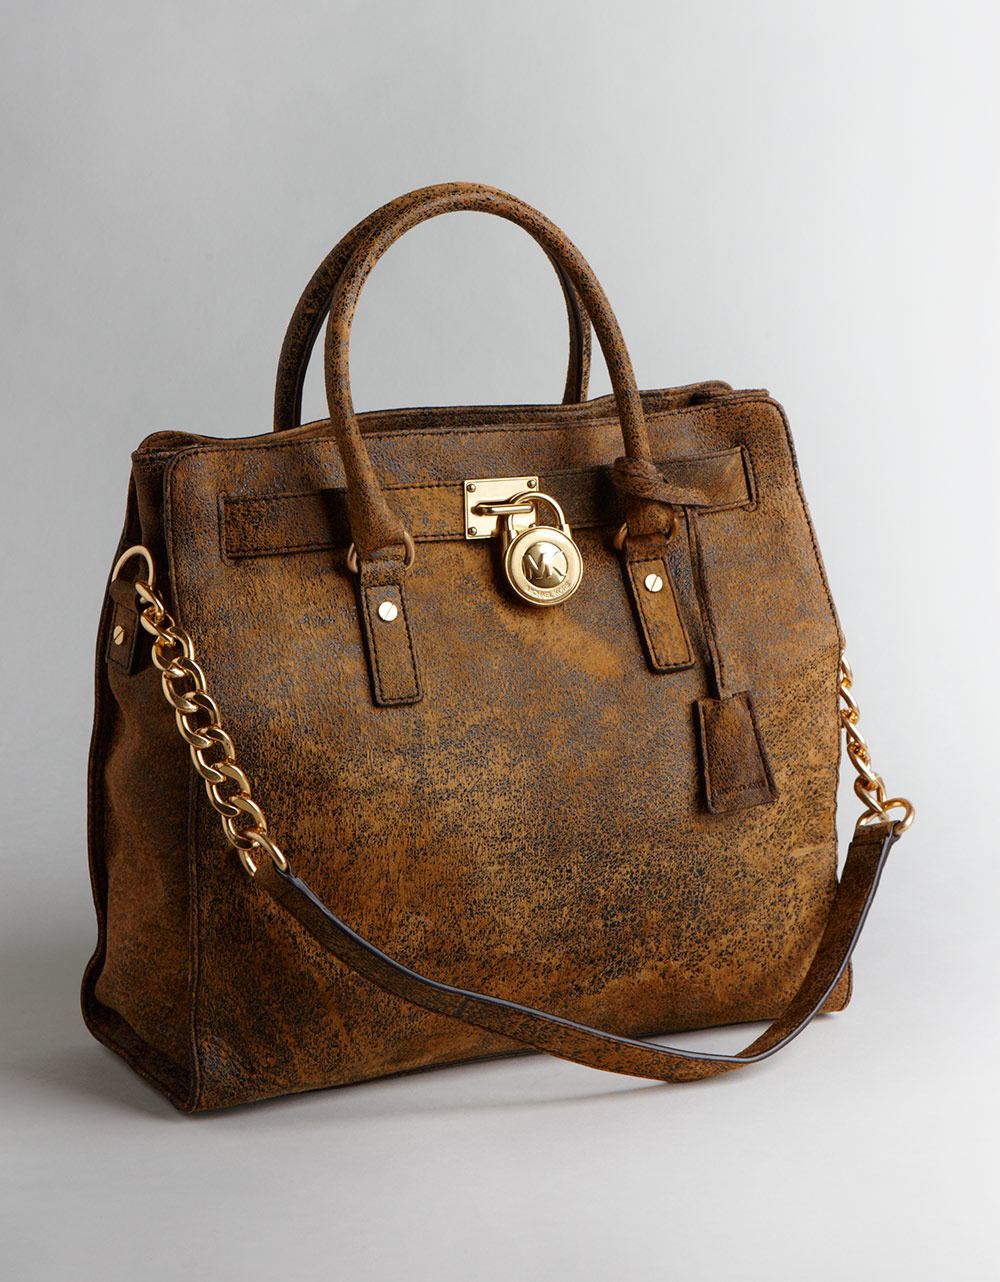 MICHAEL Michael Kors Hamilton Leather Tote Bag in Brown - Lyst